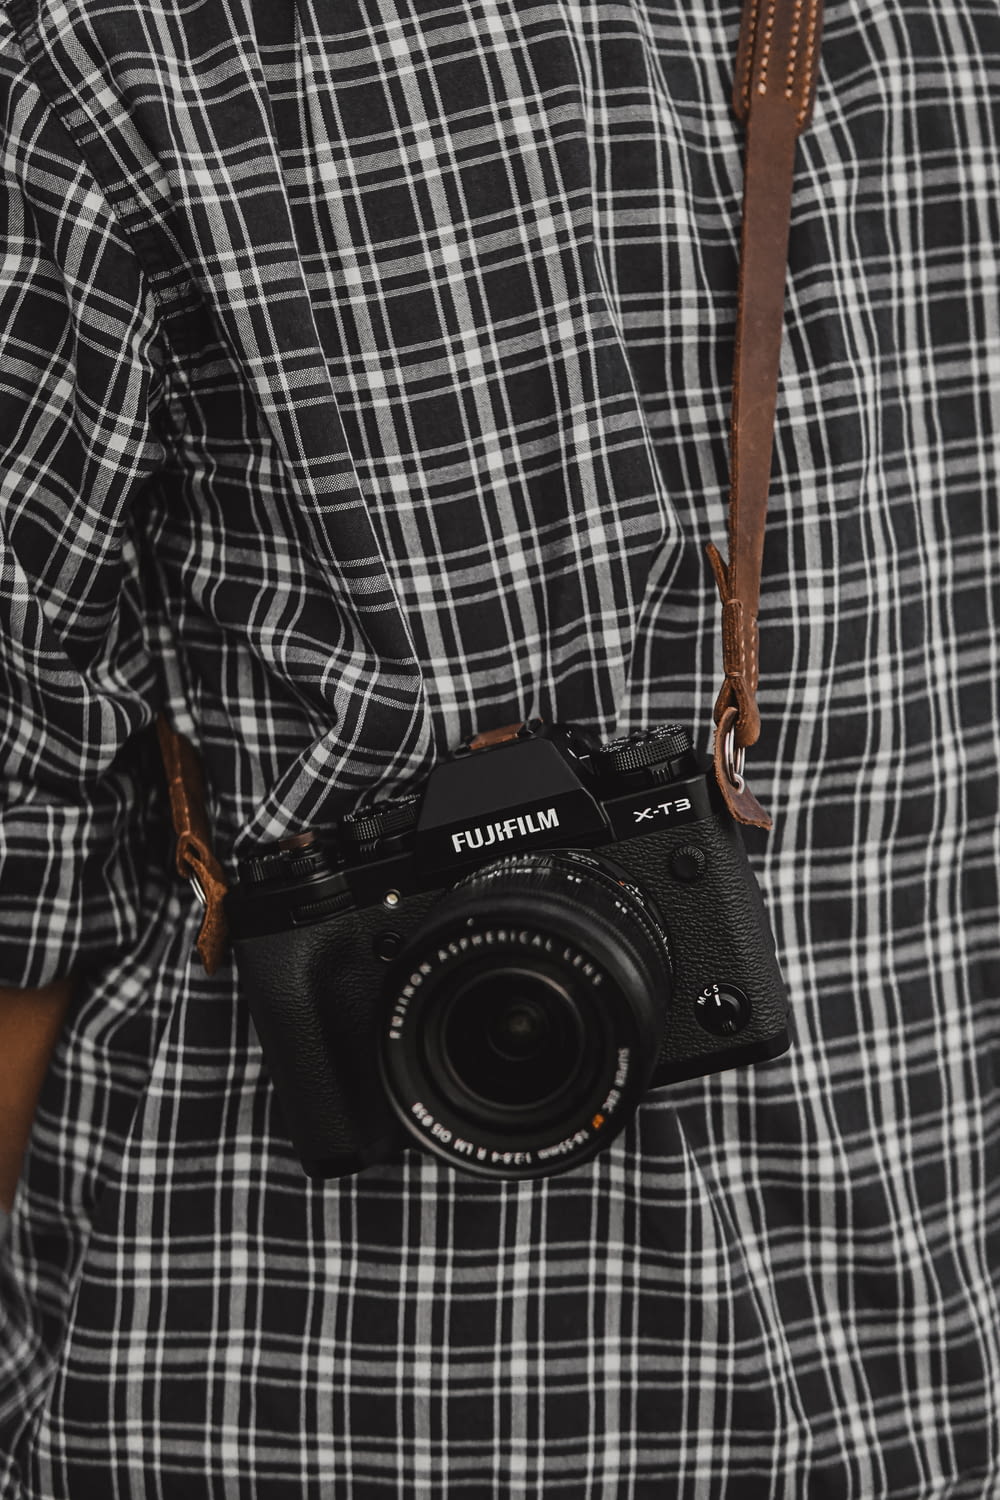 Cámara réflex Nikon negra sobre textil a cuadros blancos y negros